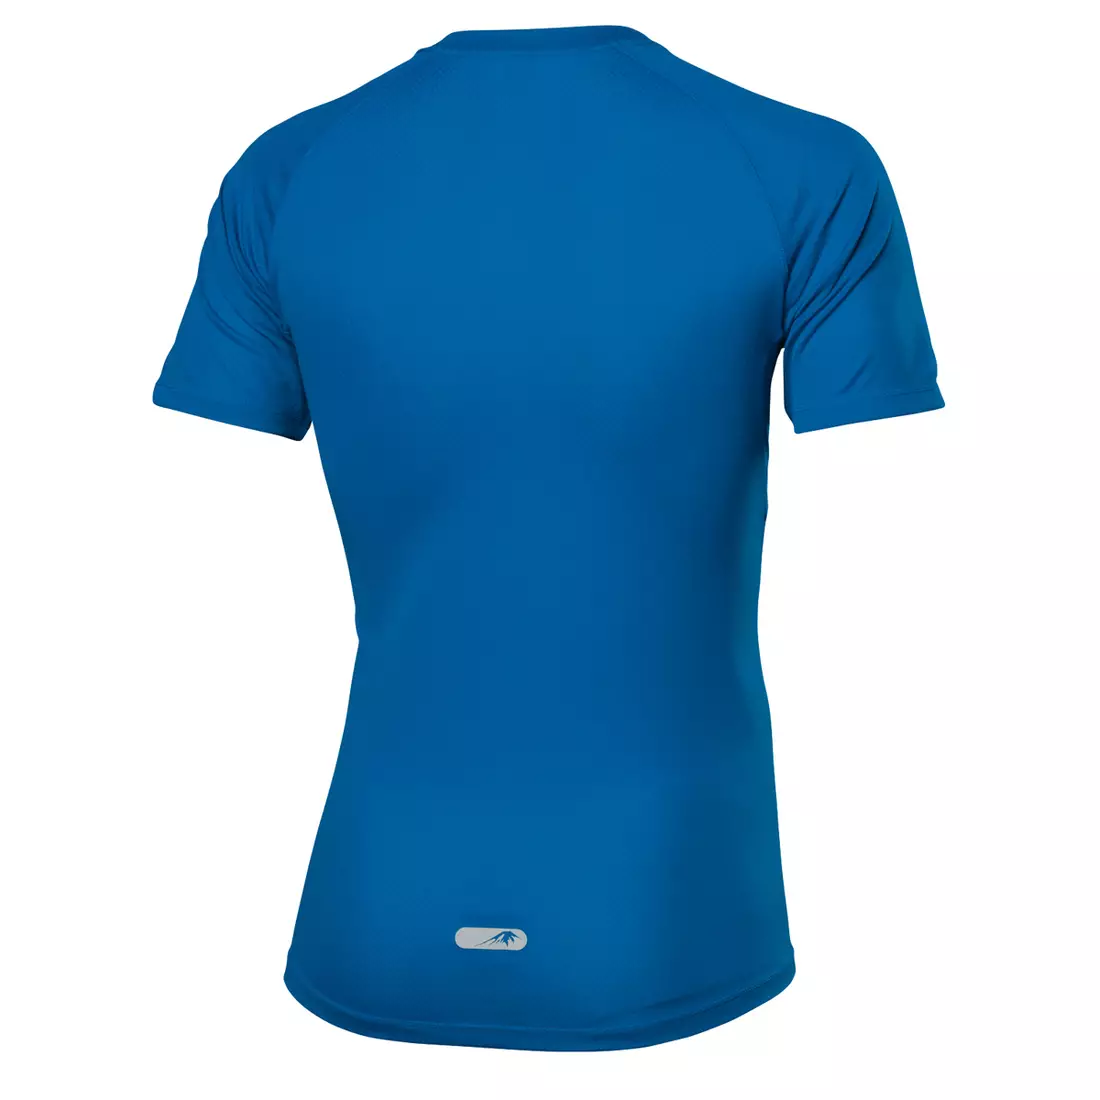 ASICS 110551-0861 FUJI GRAPHIC TOP - men's running T-shirt, color: Blue